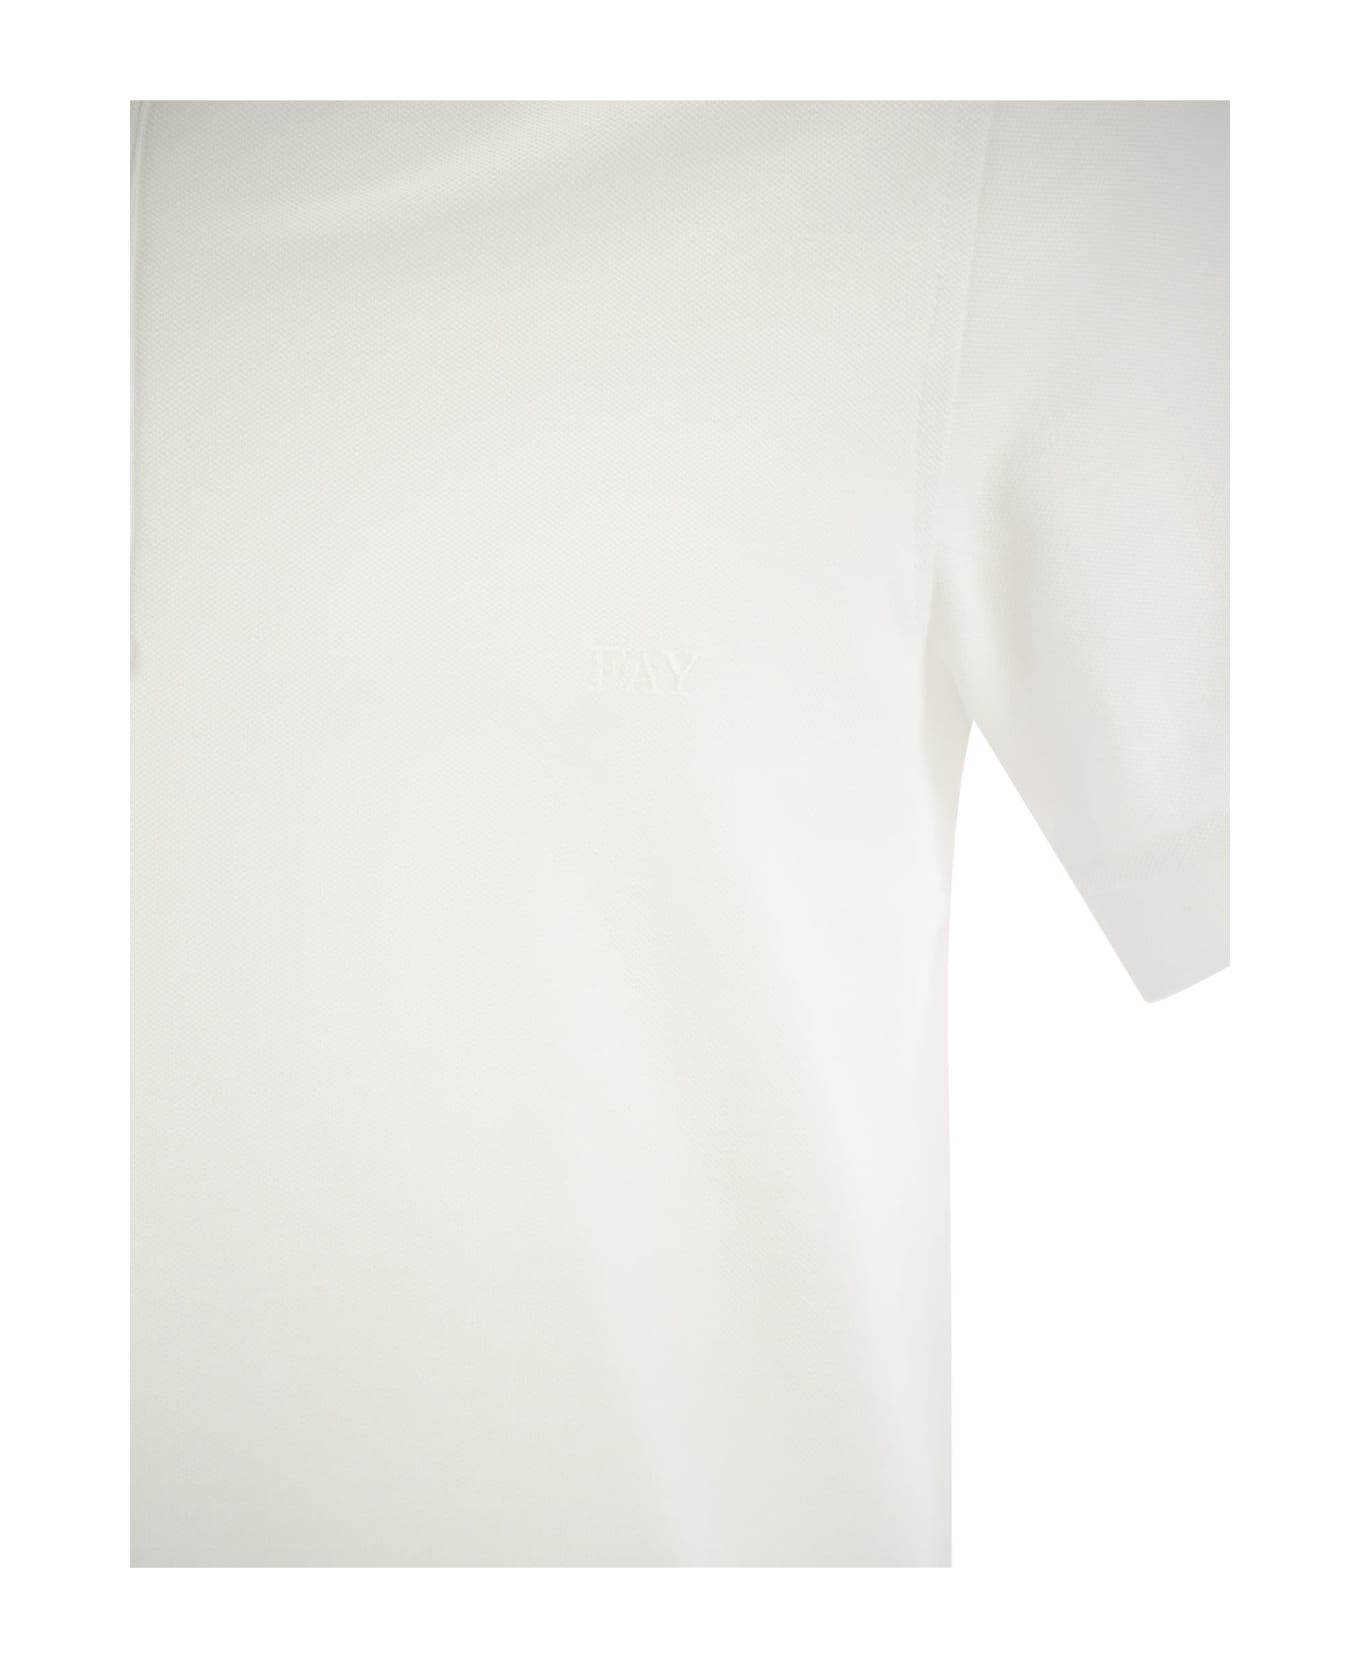 Fay Stretch Cotton Polo Shirt - White